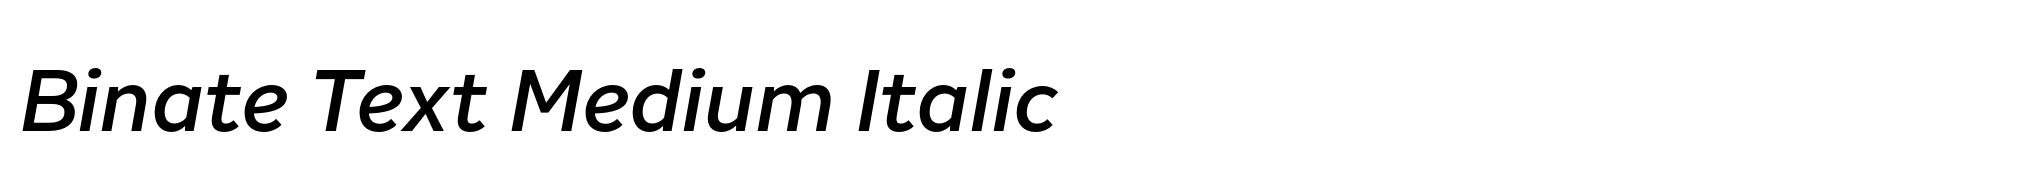 Binate Text Medium Italic image